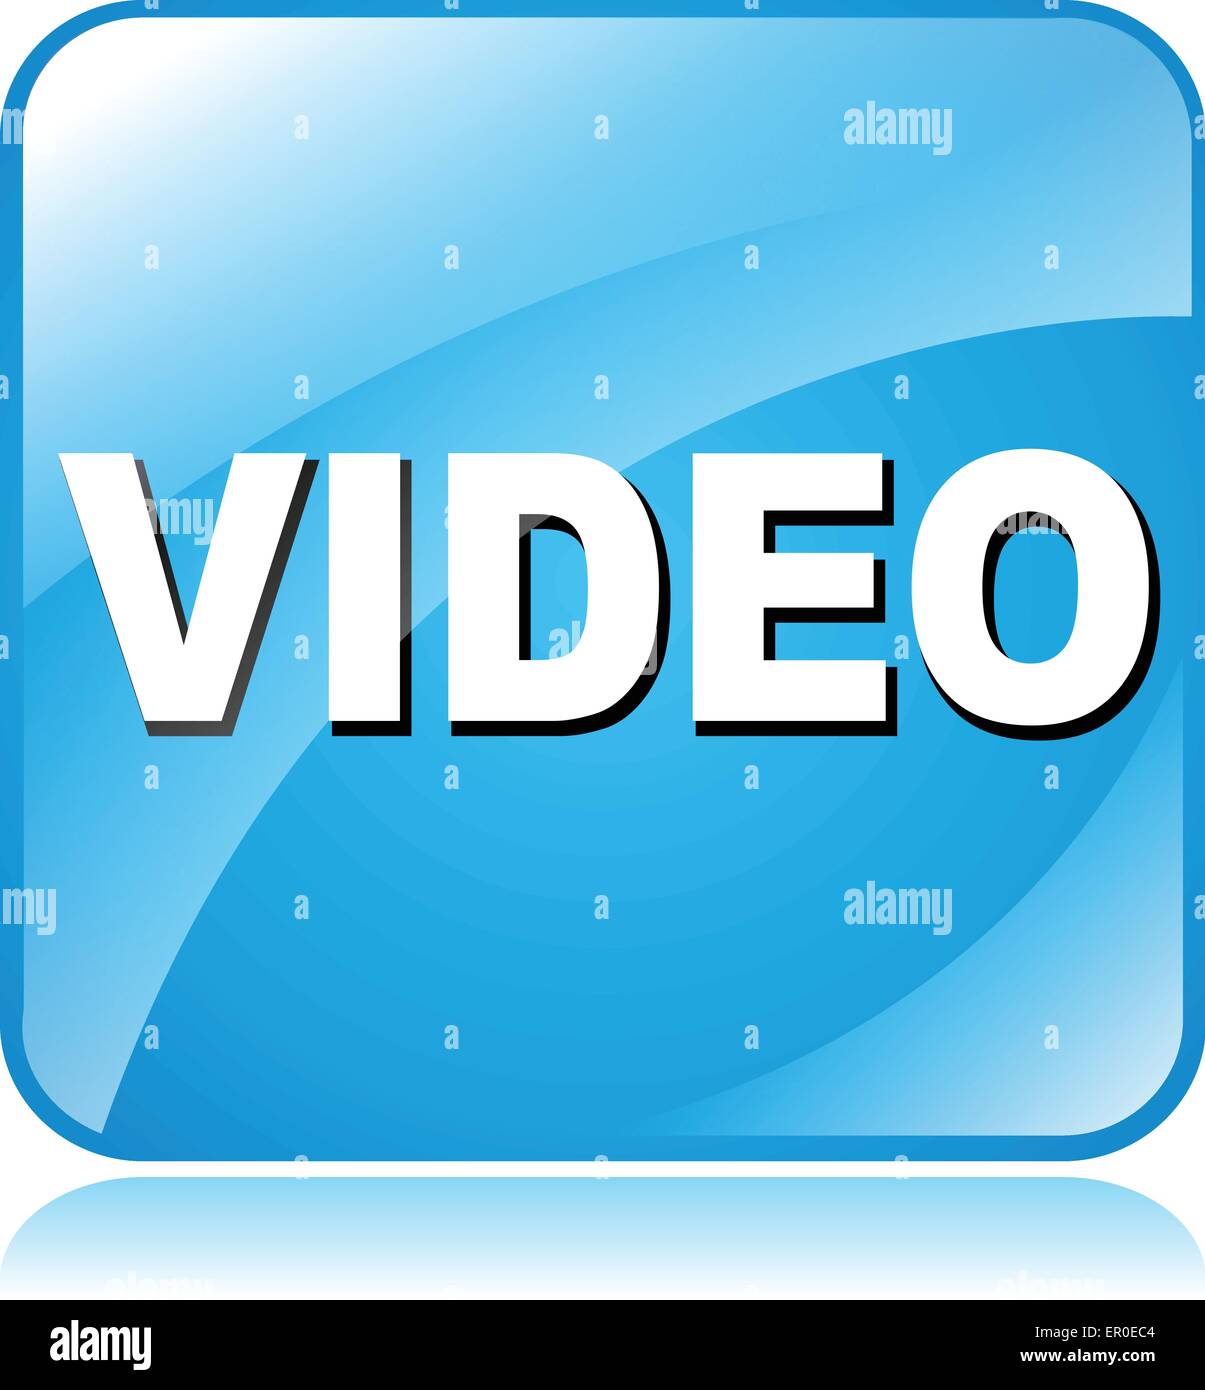 Illustration of blue square design icon for video Stock Vector